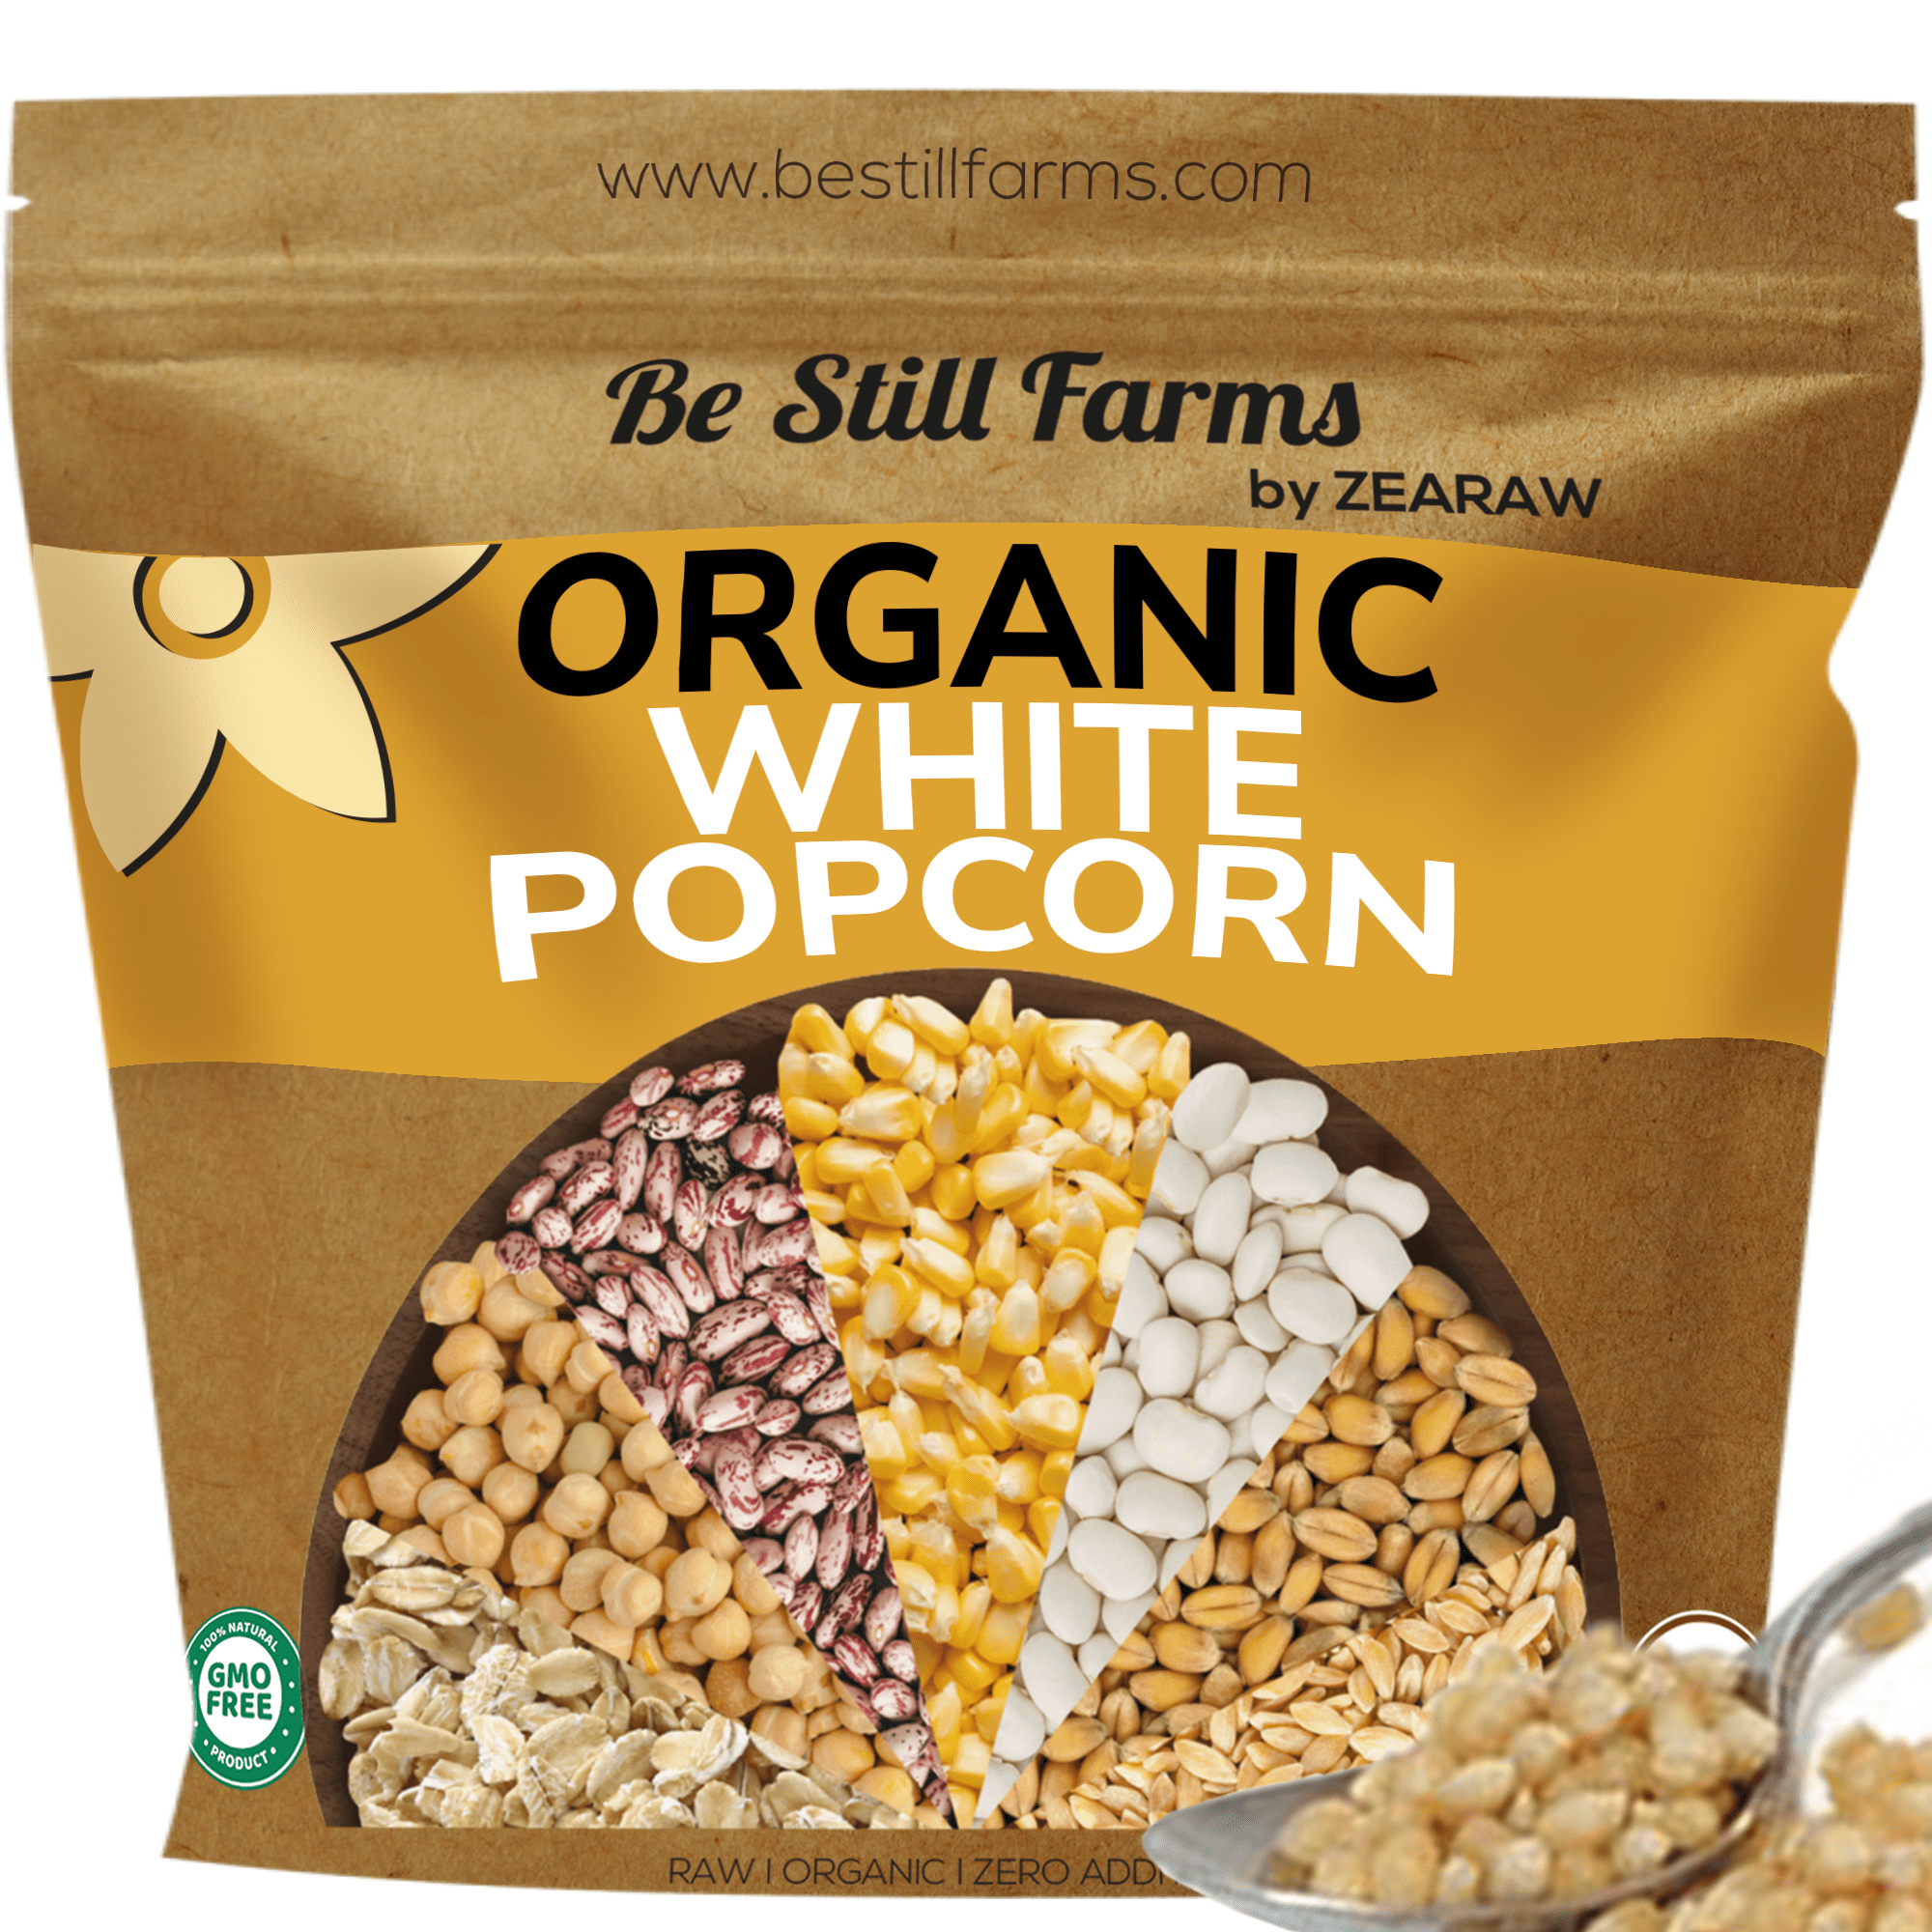 Organic White Popcorn - Be Still Farms